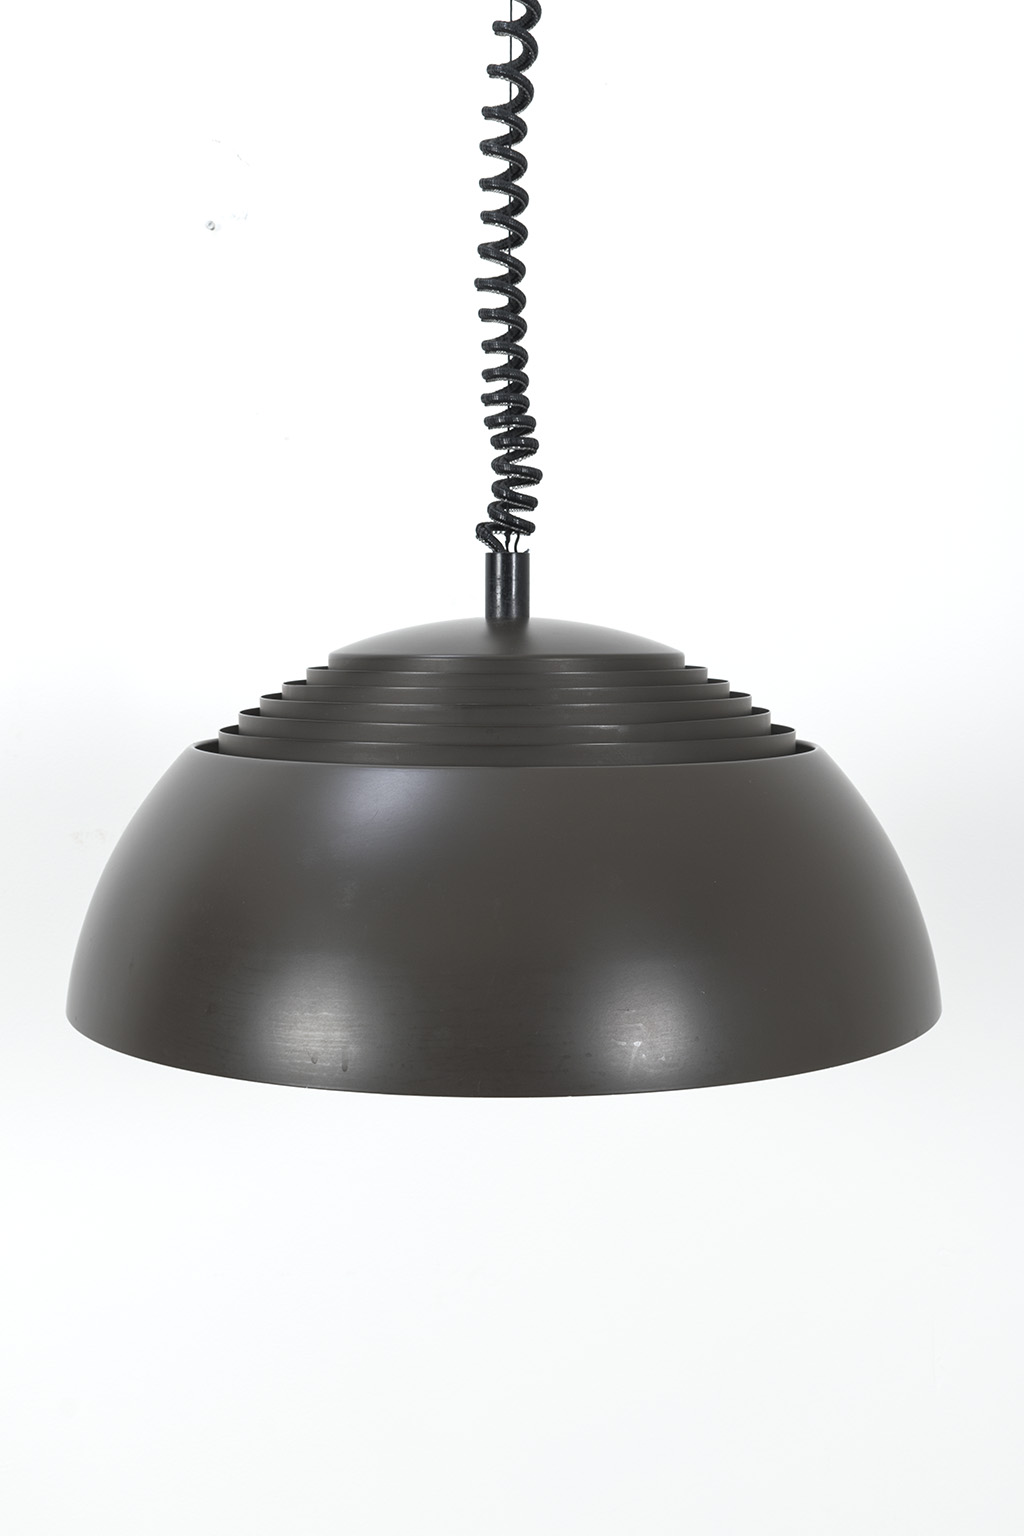 AJ Royal hanglamp van Arne Jacobsen